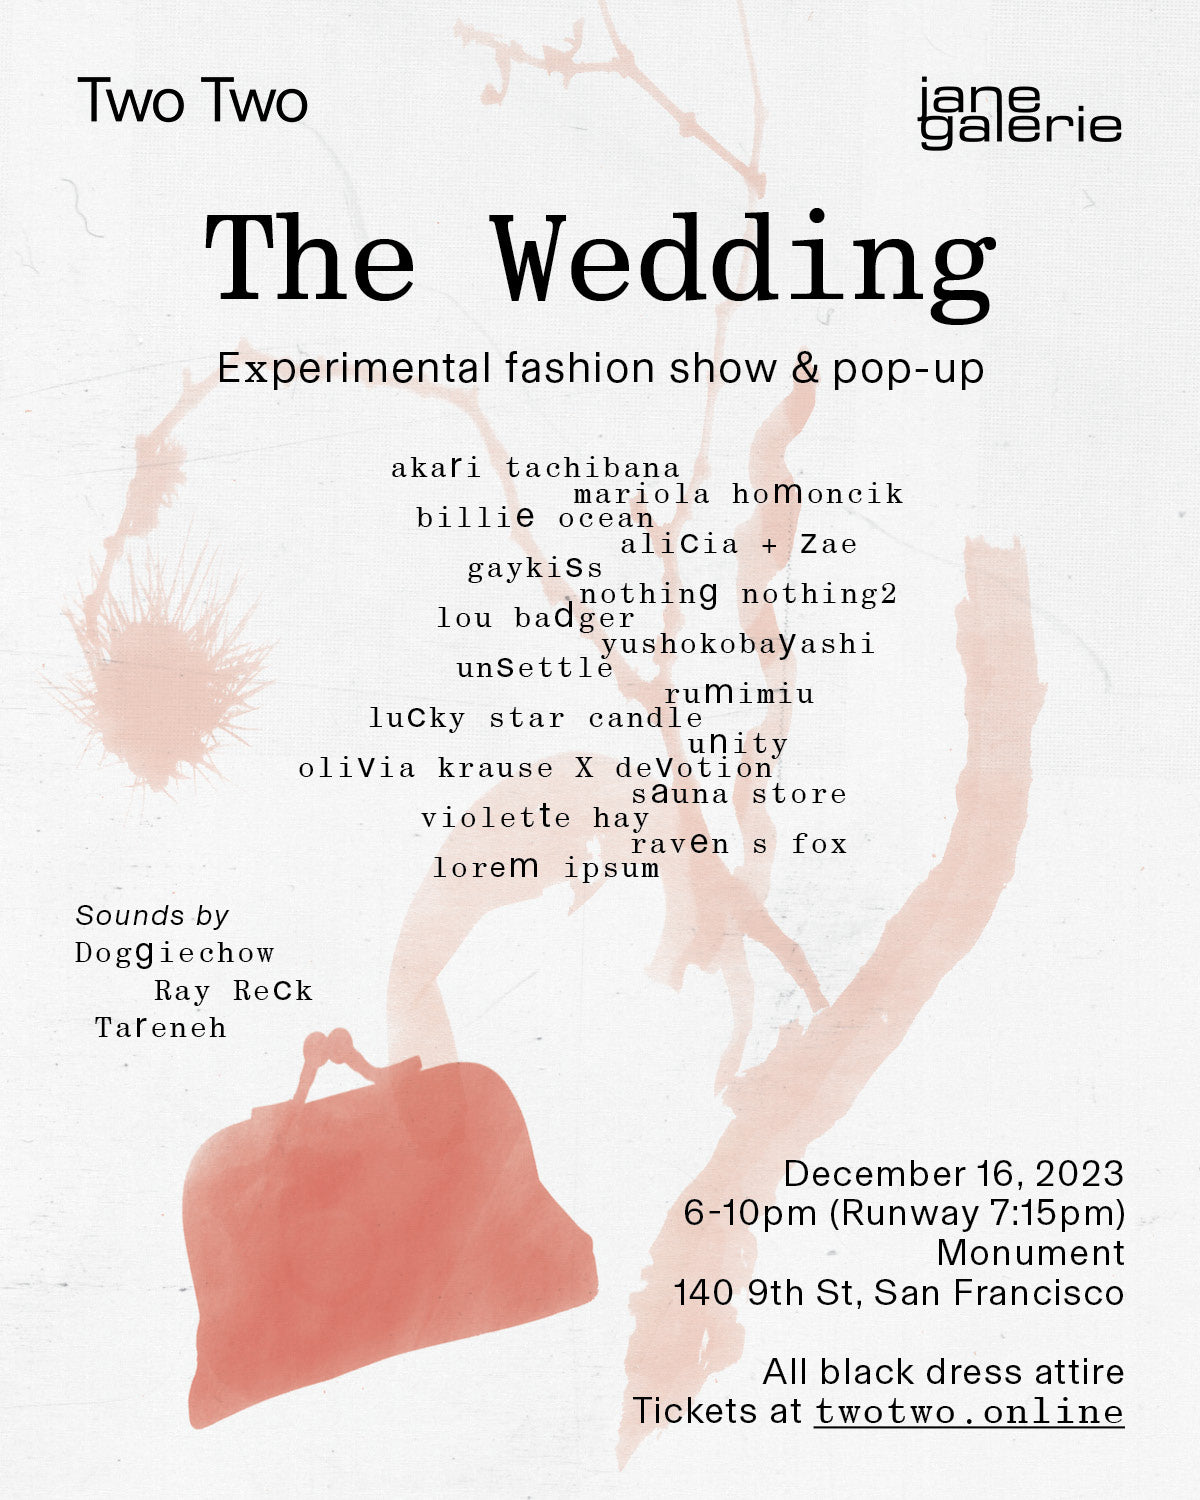 The Wedding Experimental Fashion Show — Saturday 12/16/23